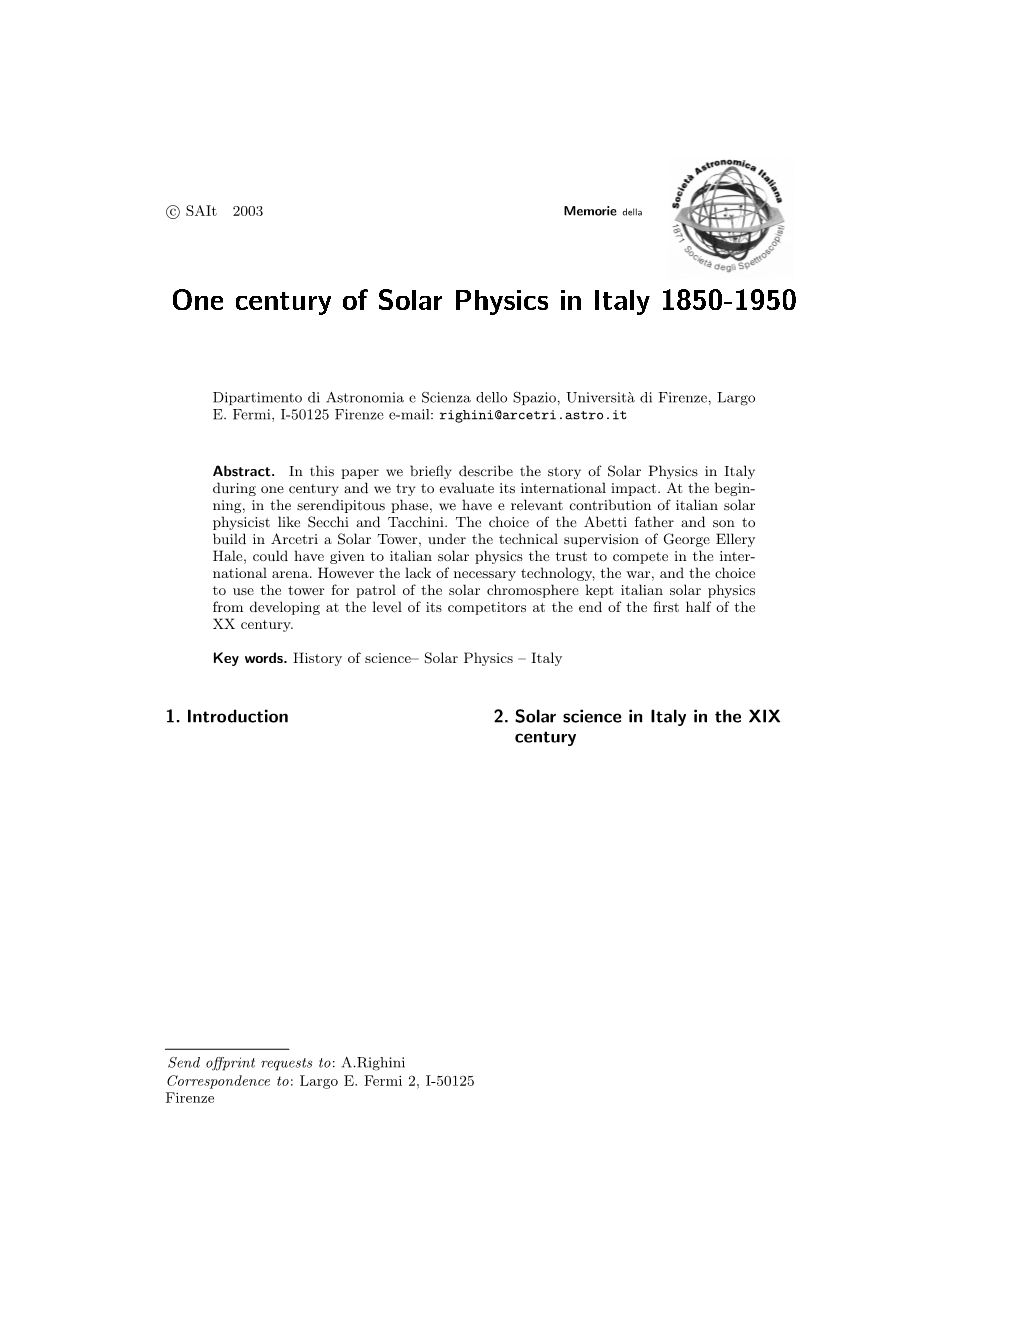 One Century of Solar Physics in Italy 1850-1950